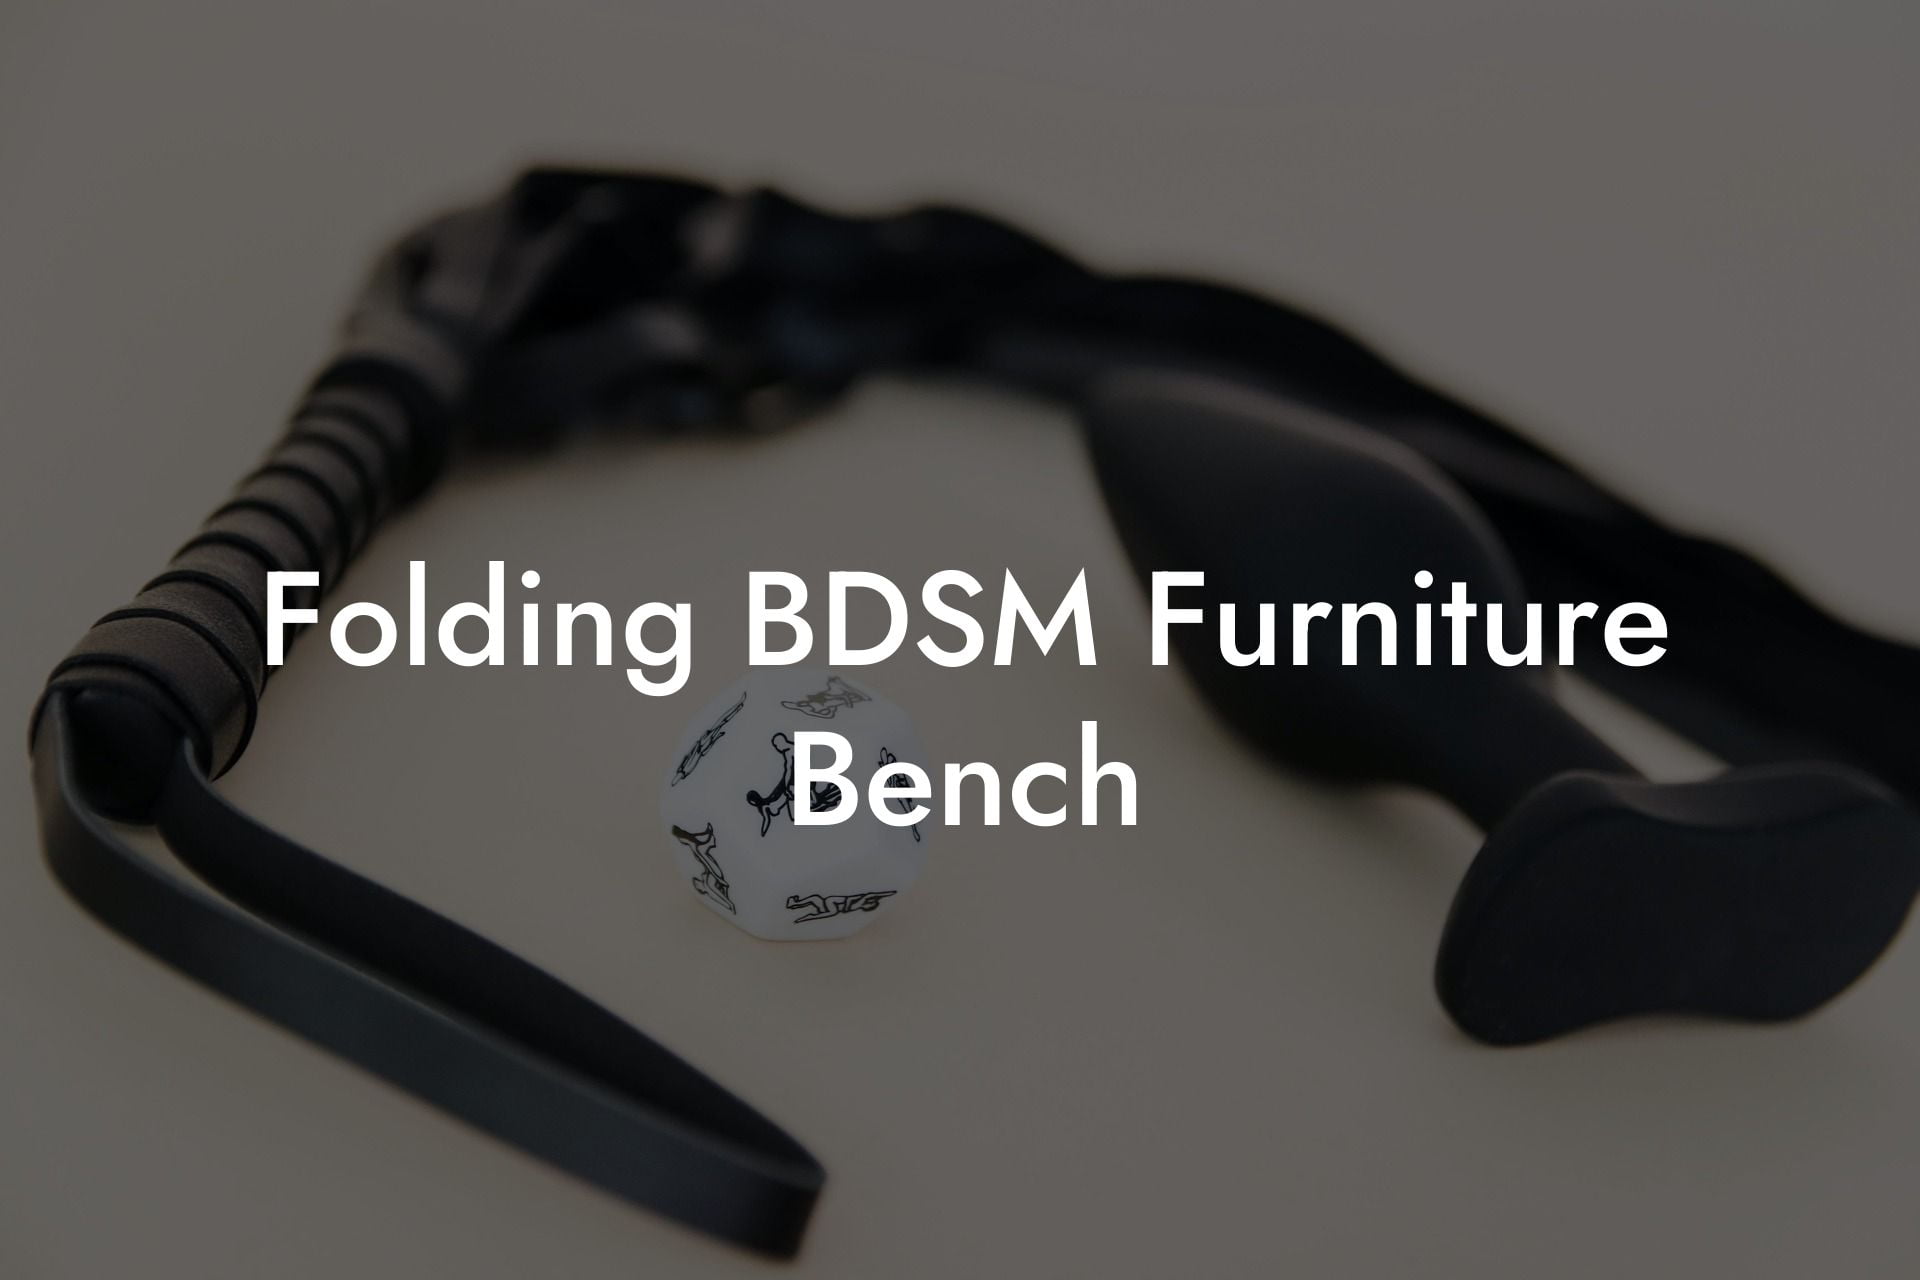 Folding BDSM Furniture Bench